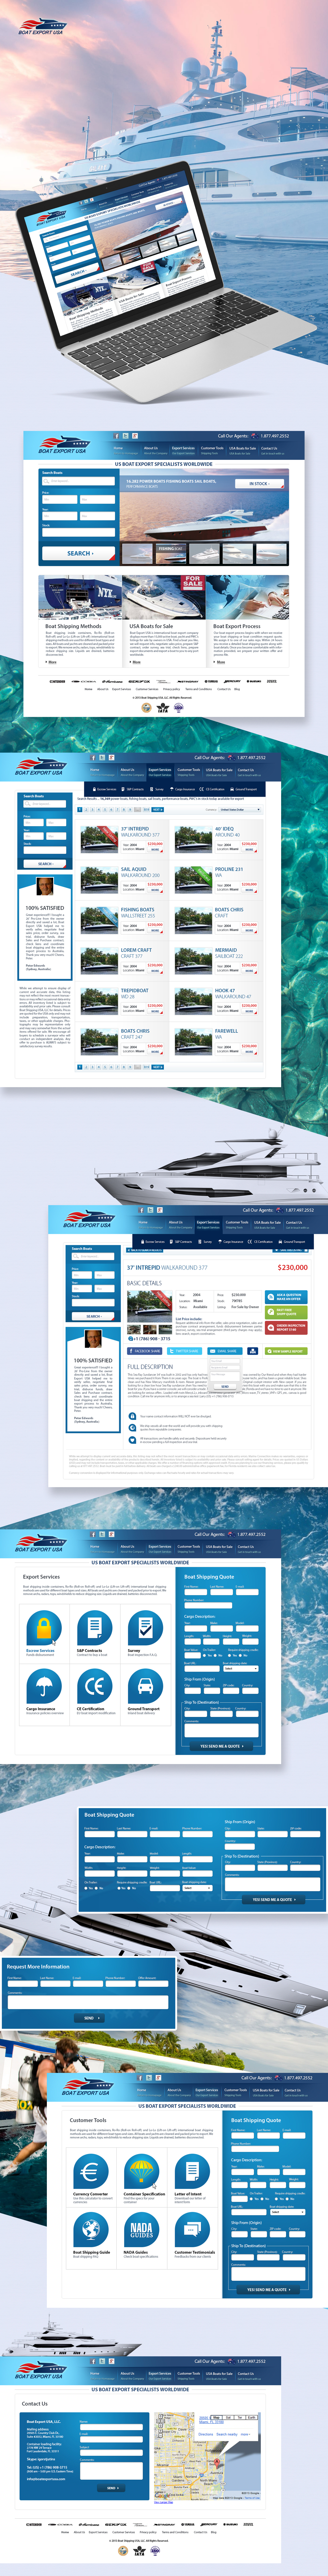 BoatExport boat boats selling shop online boats shop shopping boats Web Design  boats on web